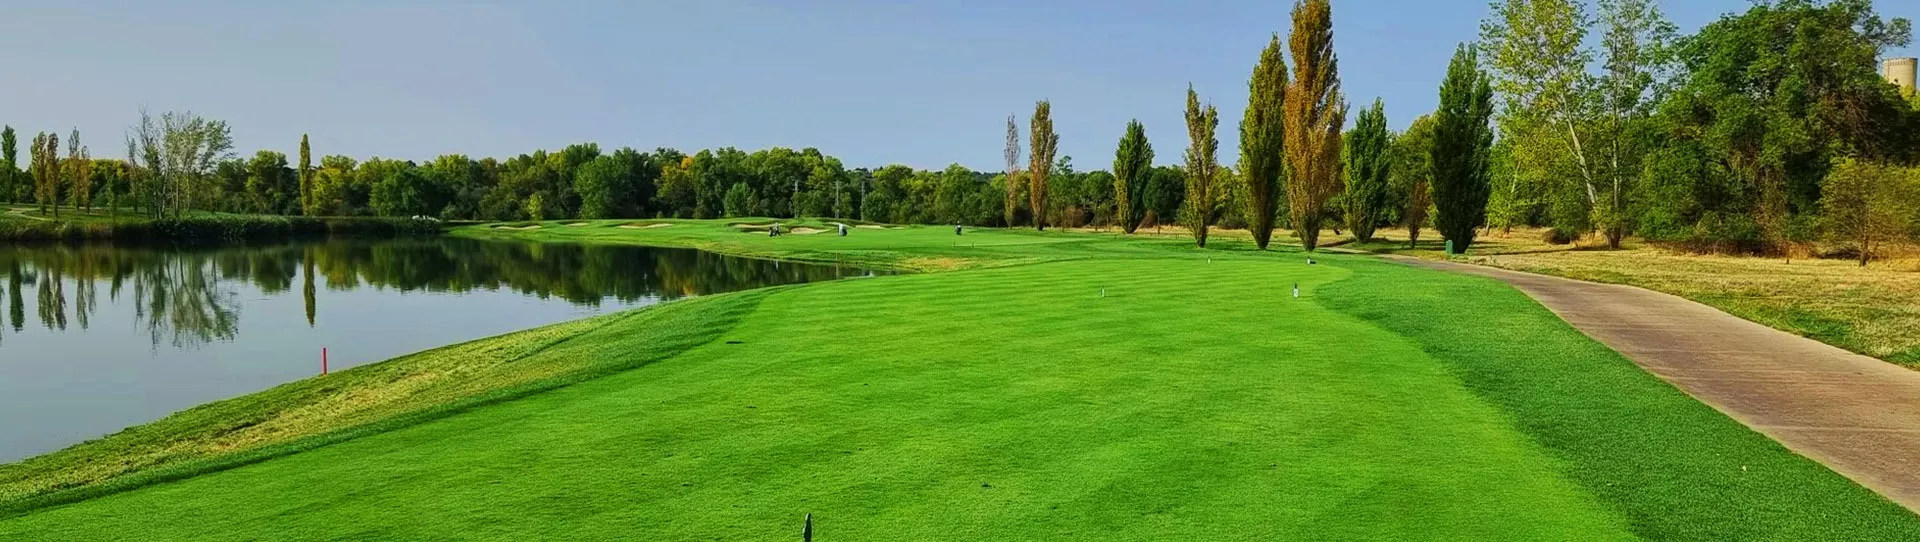 Spain golf courses - La Moraleja Golf Course III - Photo 2